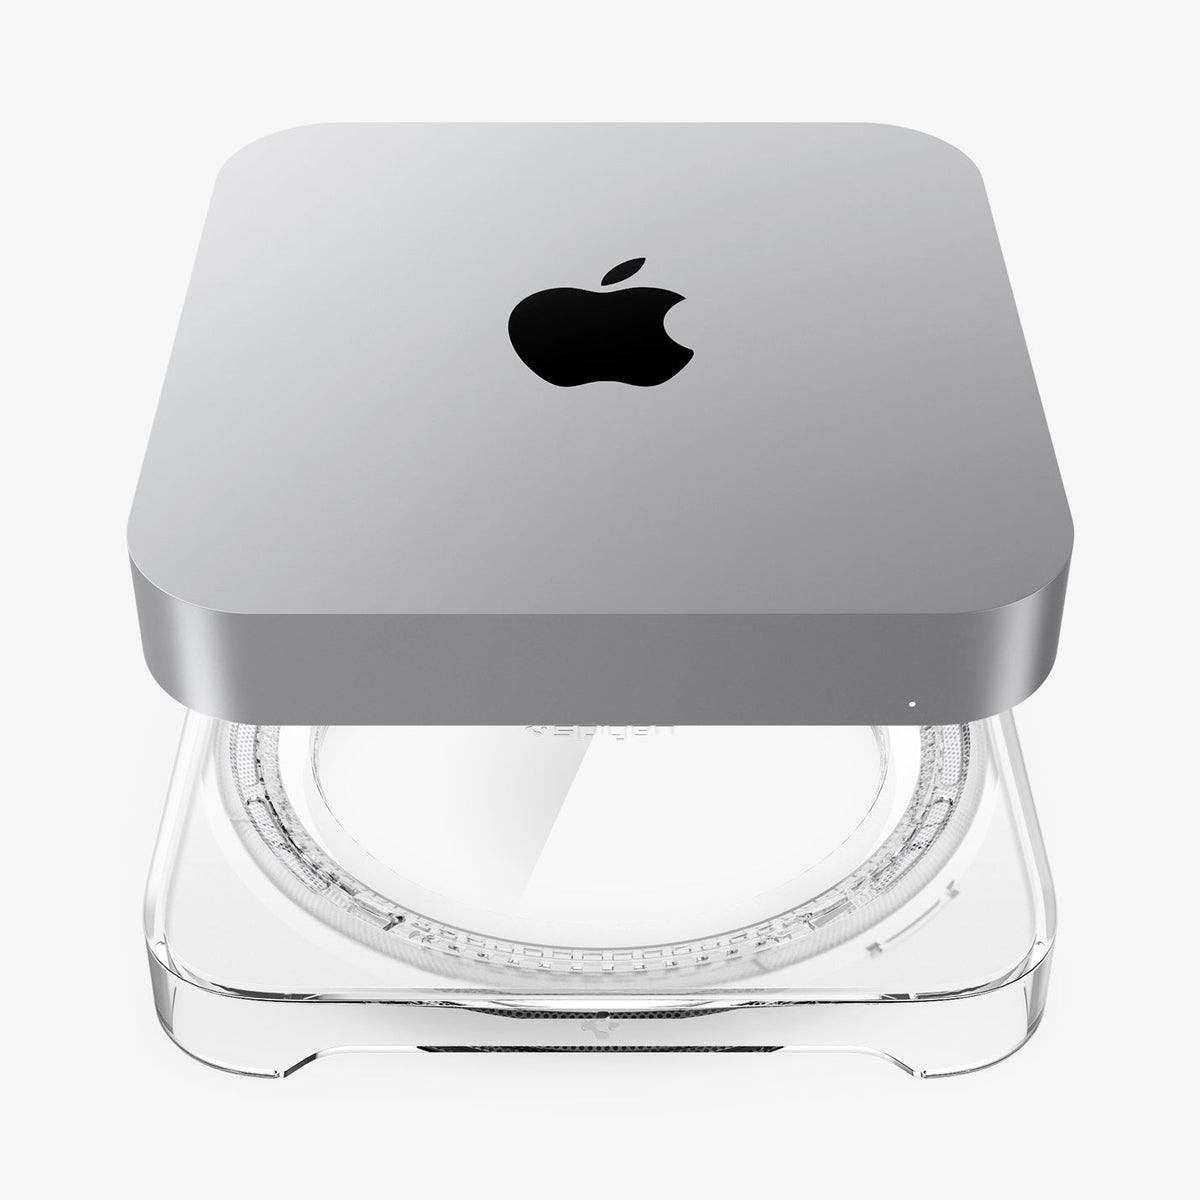 Apple Mac Mini Vertical Dock Multiple Sizes Available 3D Printed Mac Mini  Holder 